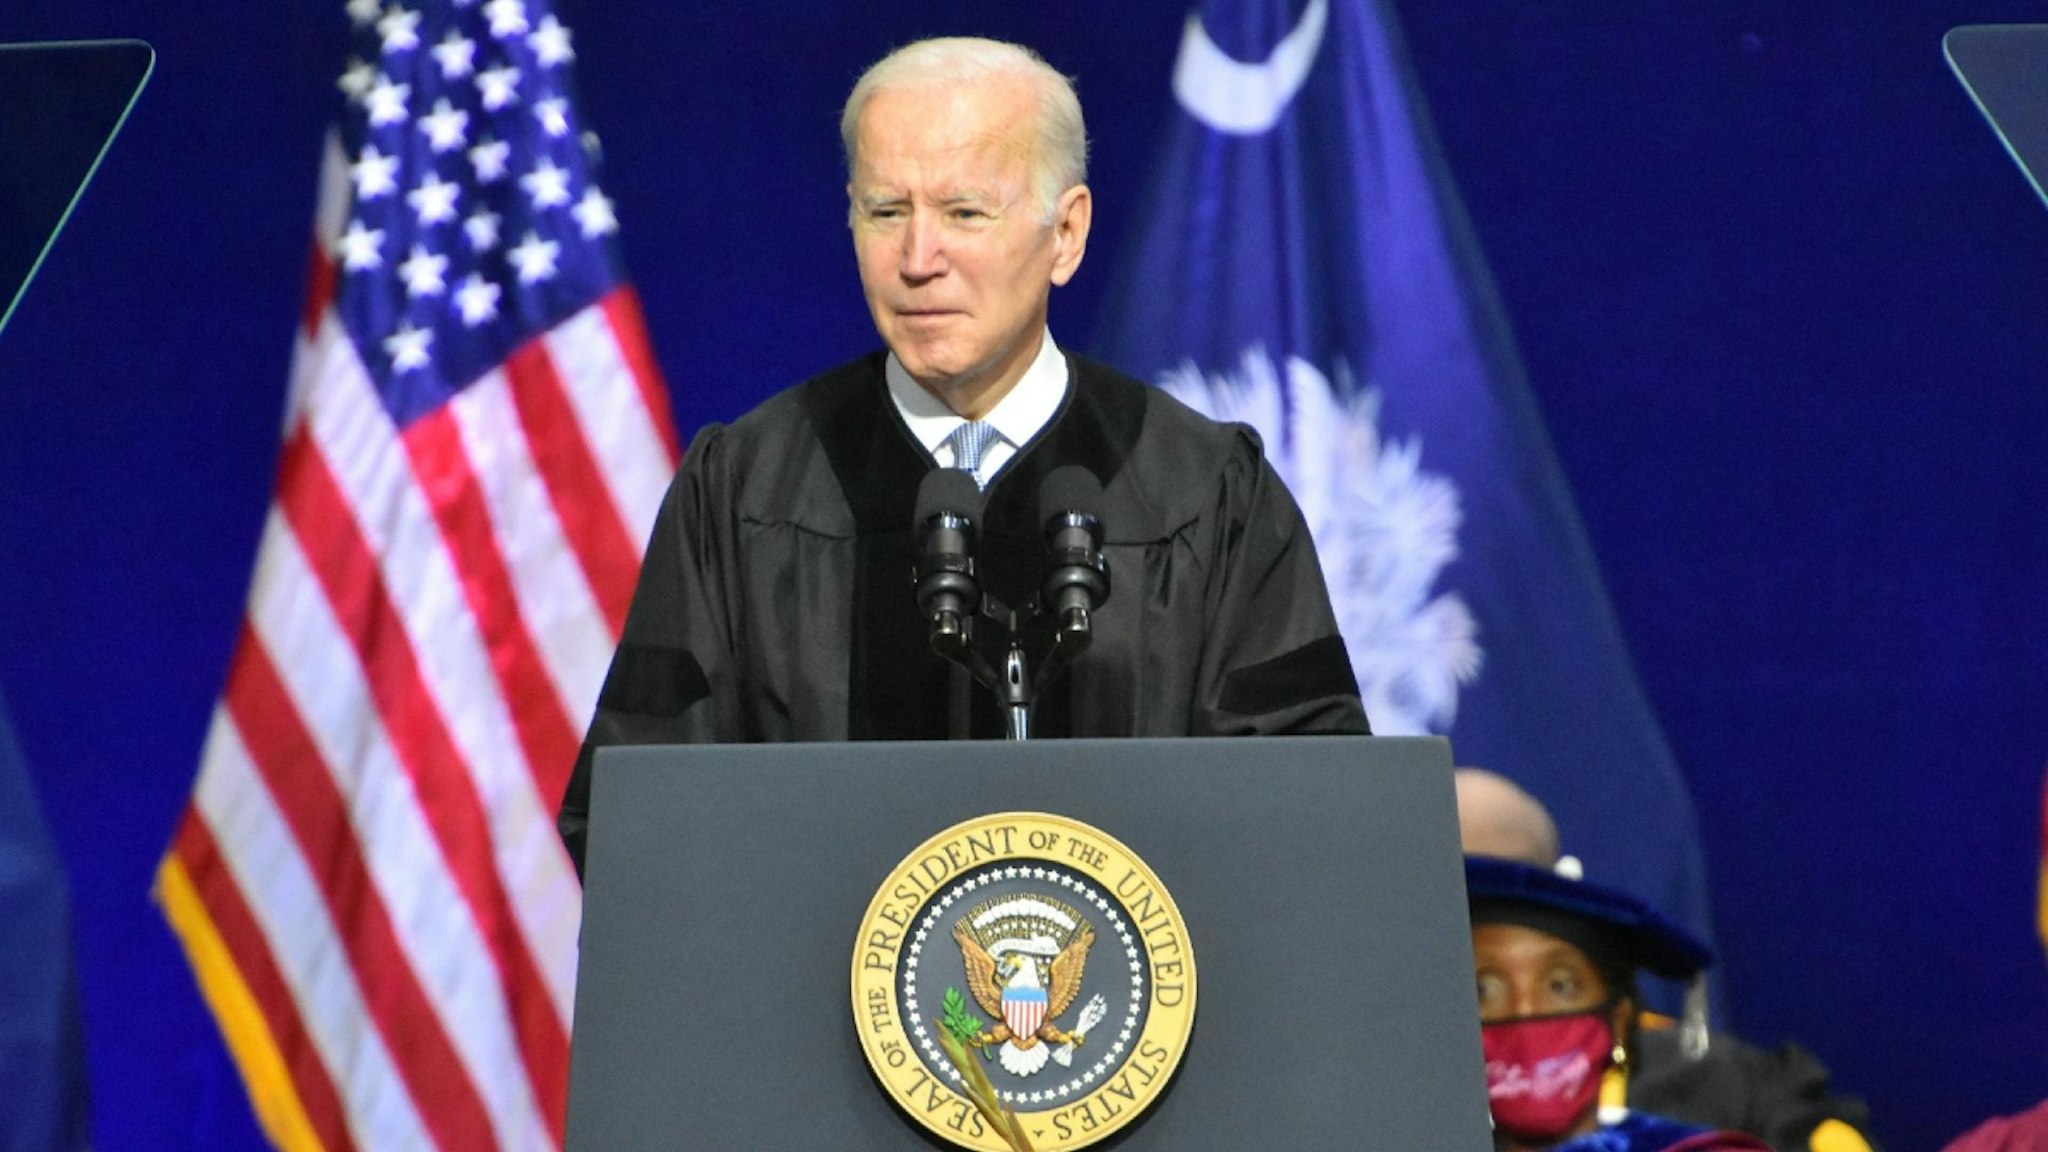 ORANGEBURG, SOUTH CAROLINA, USA - DECEMBER 17: U.S President Joe Biden delivers remarks at South Carolina State Universityâs 2021 Fall Commencement Ceremony in Orangeburg, SC, United States on December 17, 2021.